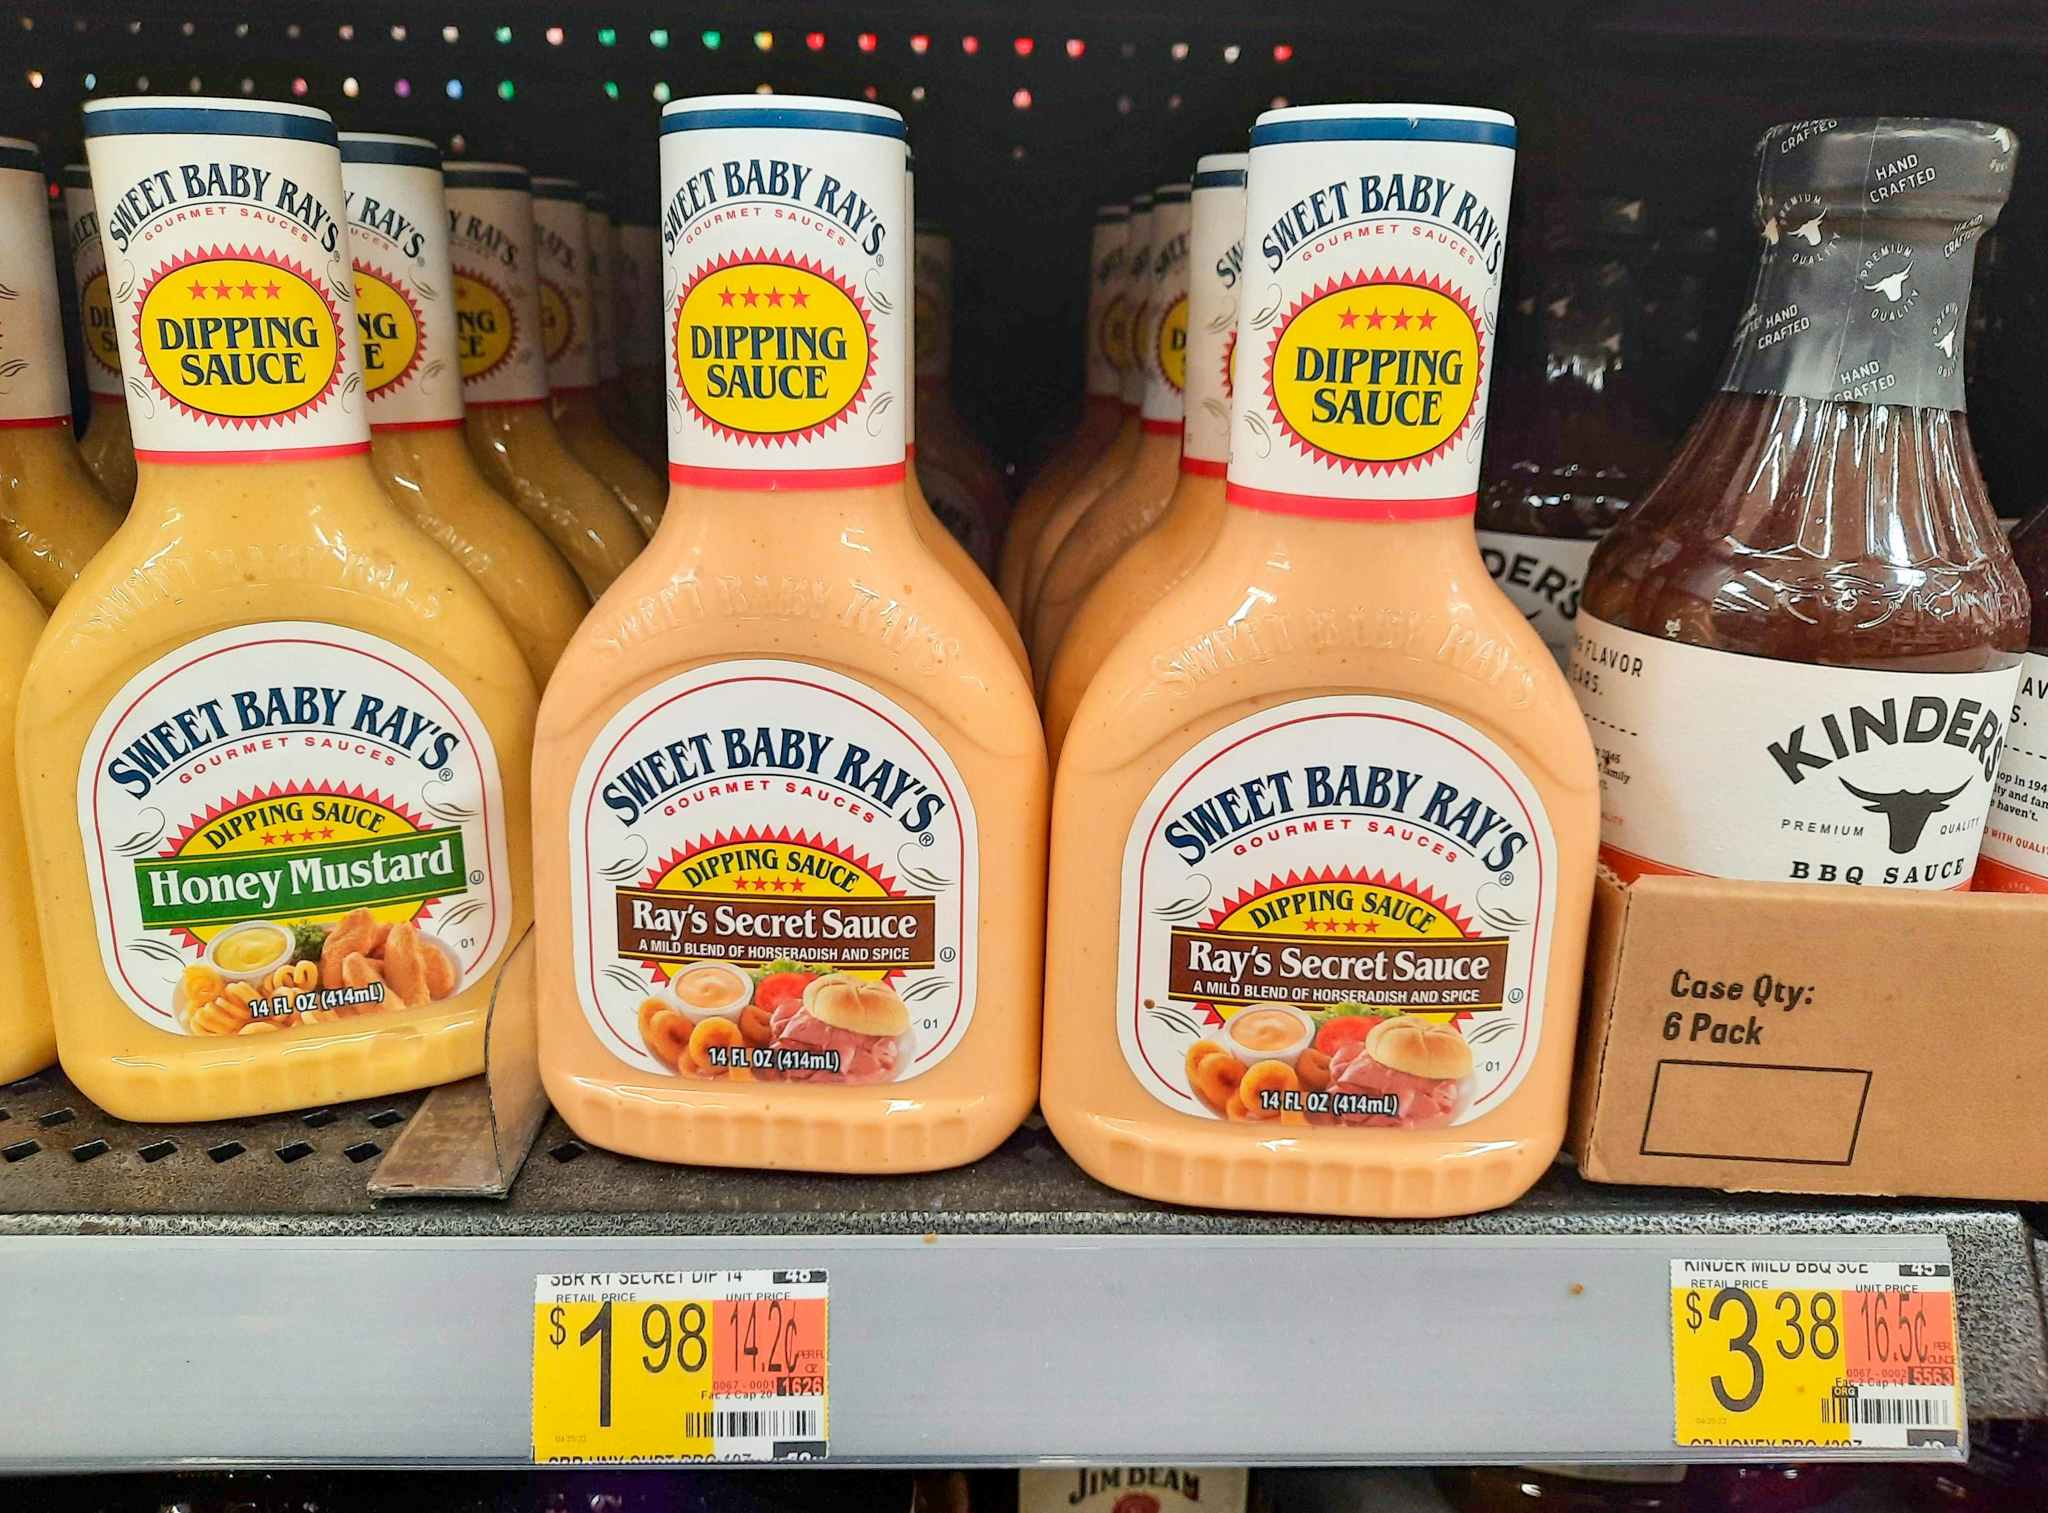 Sweet Baby Rays Secret Sauce on display at Walmart